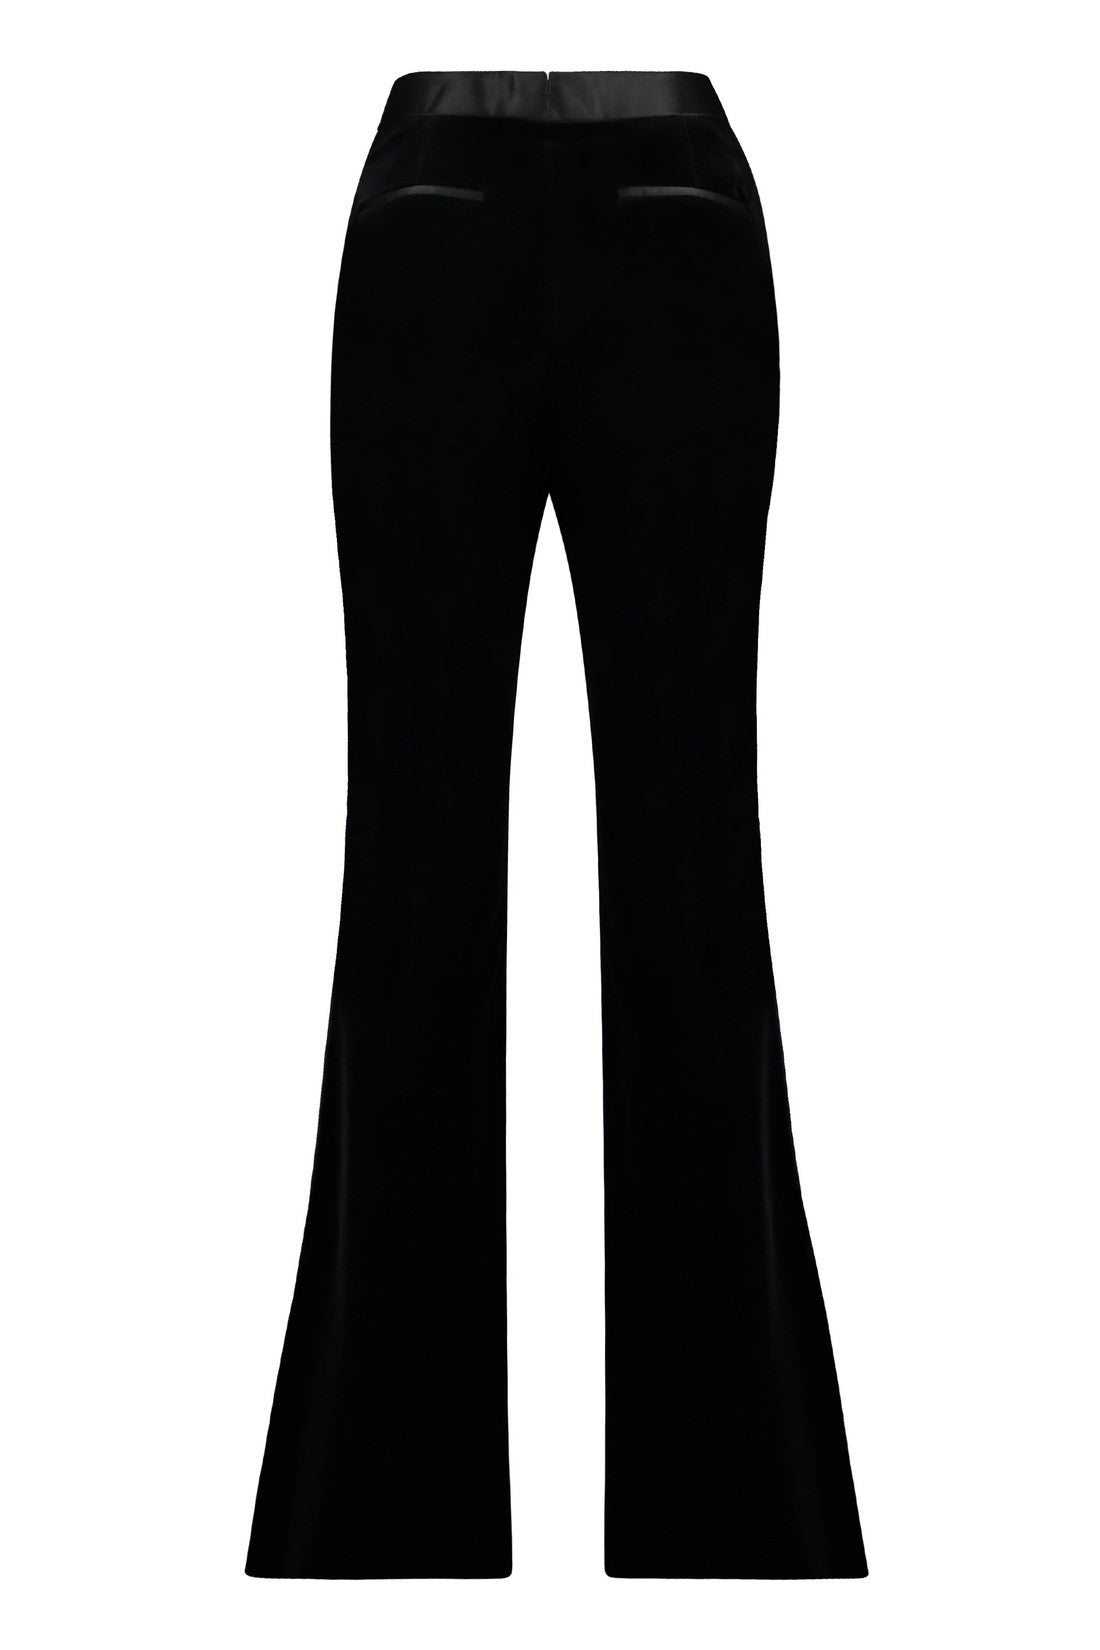 Tom Ford-OUTLET-SALE-velvet trousers-ARCHIVIST